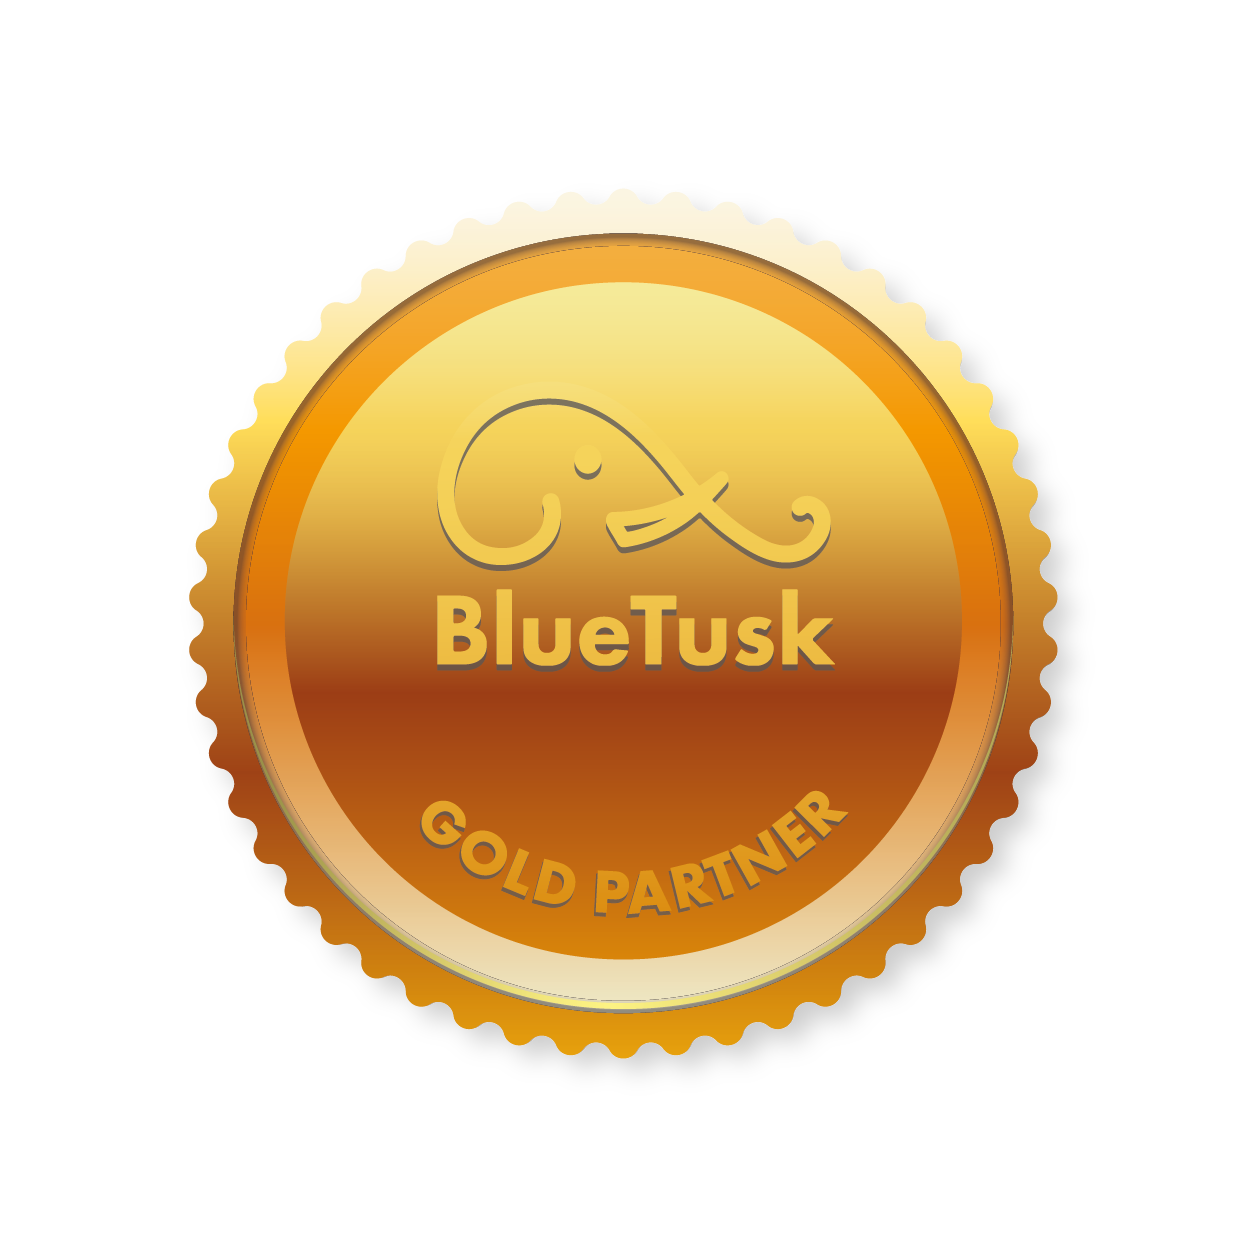 BlueTusk Gold Partner Package